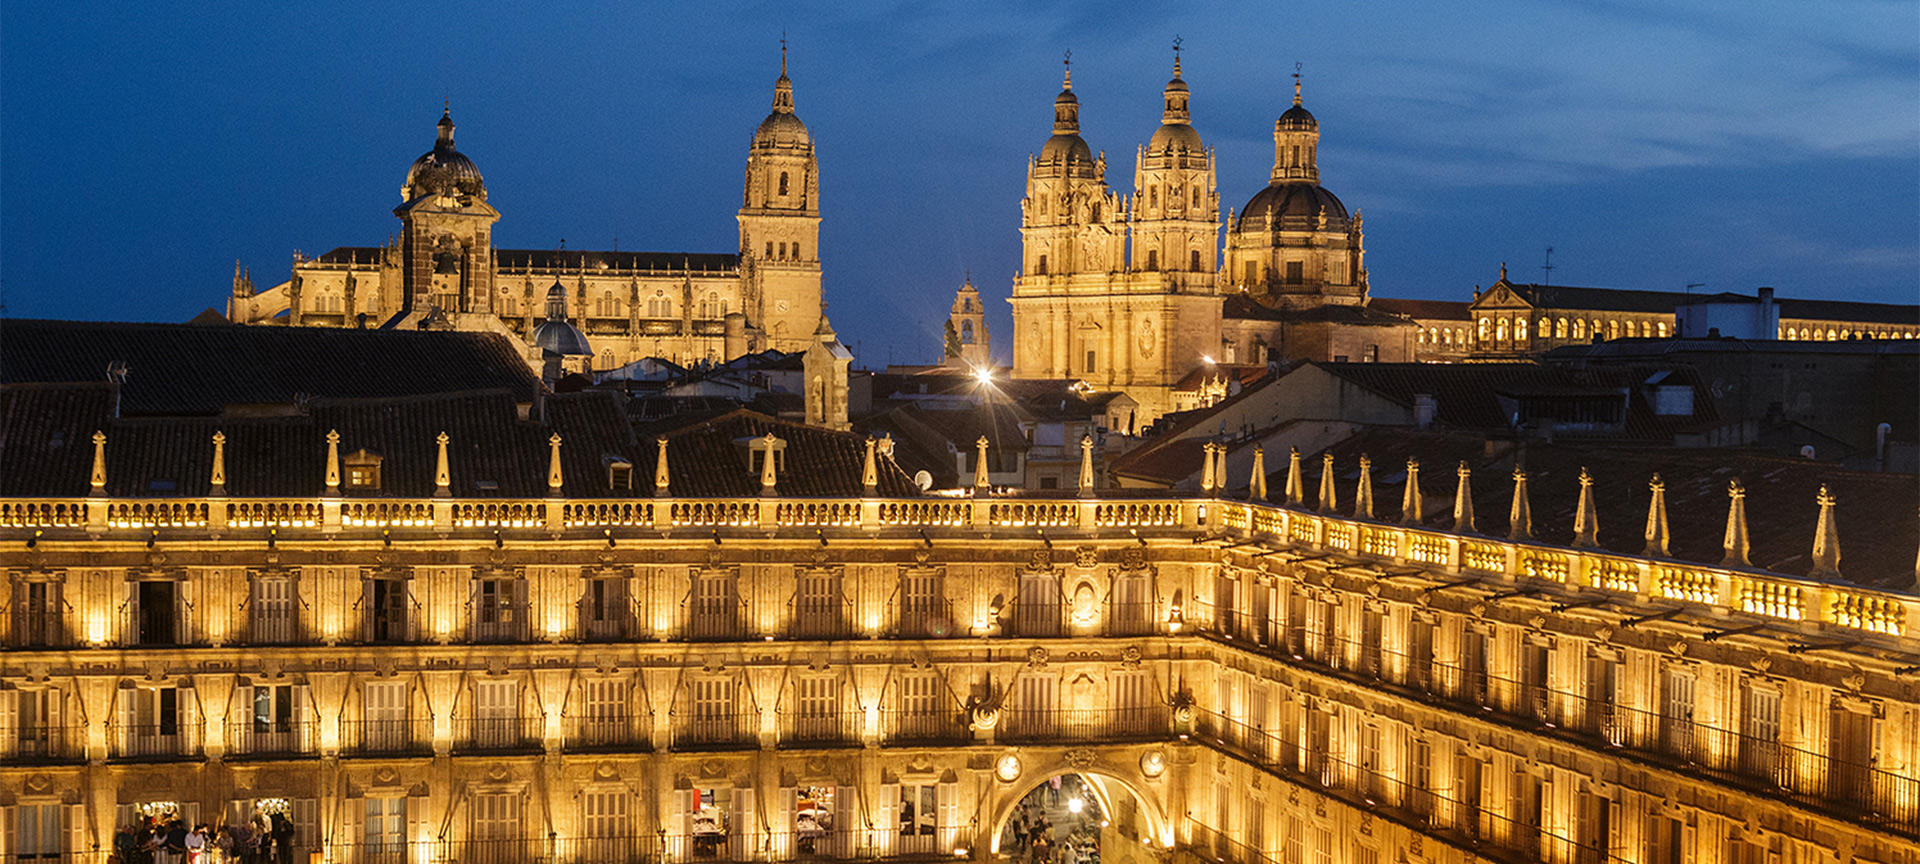 Plaza Mayor, Cathedral and University of Salamanca